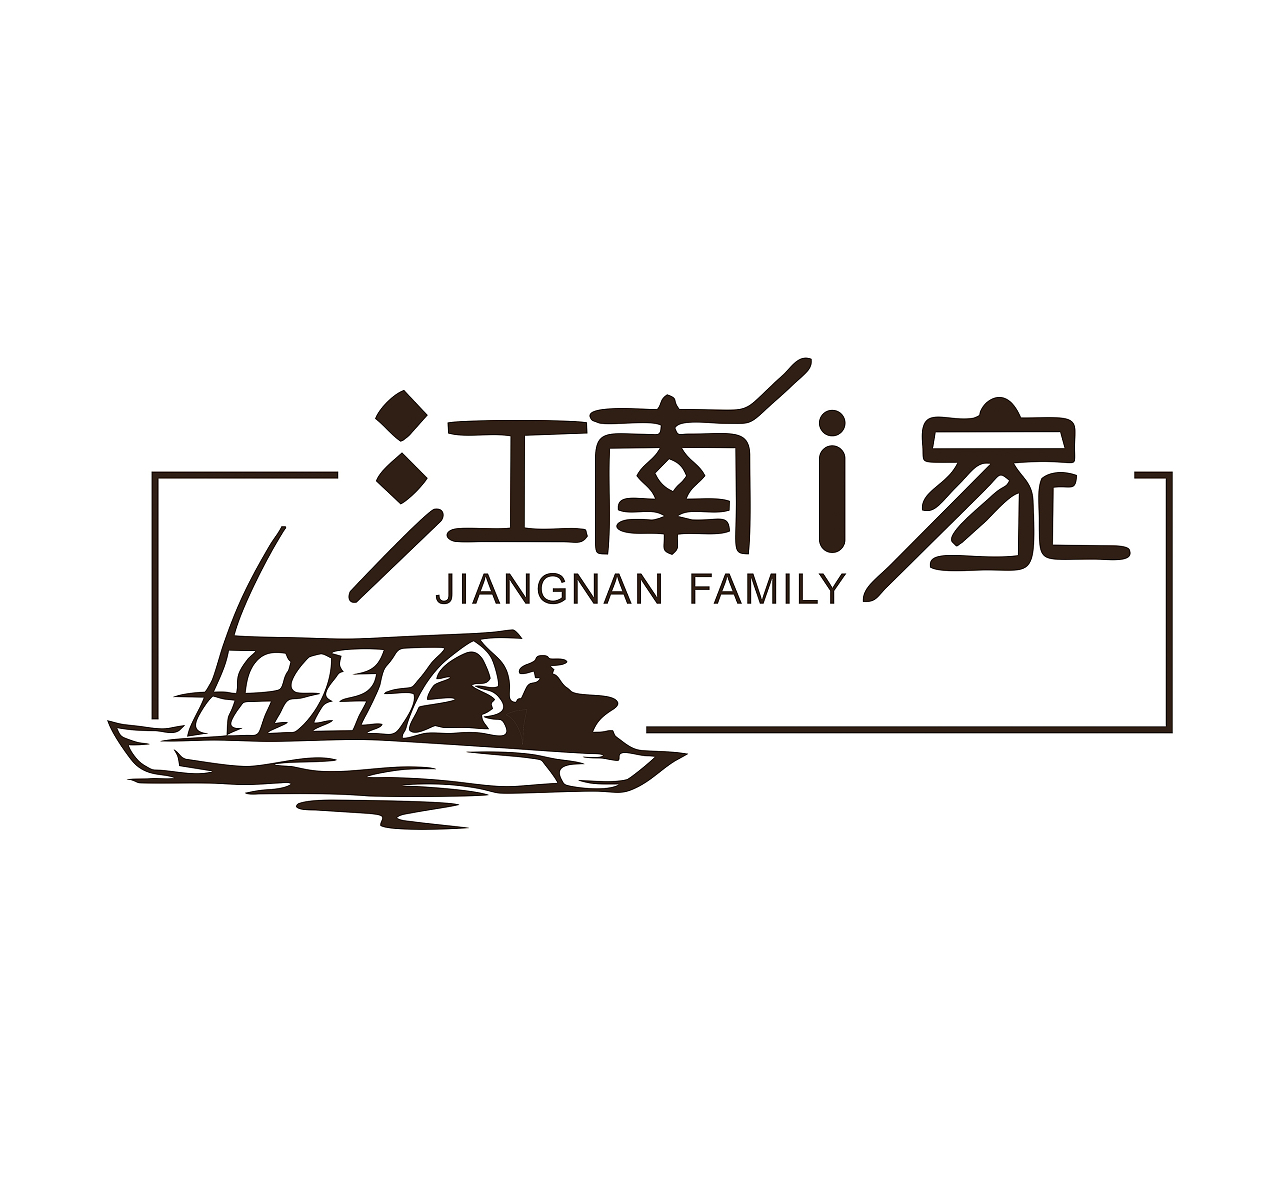 江南人家logo江南水乡logo船logo中国风logo